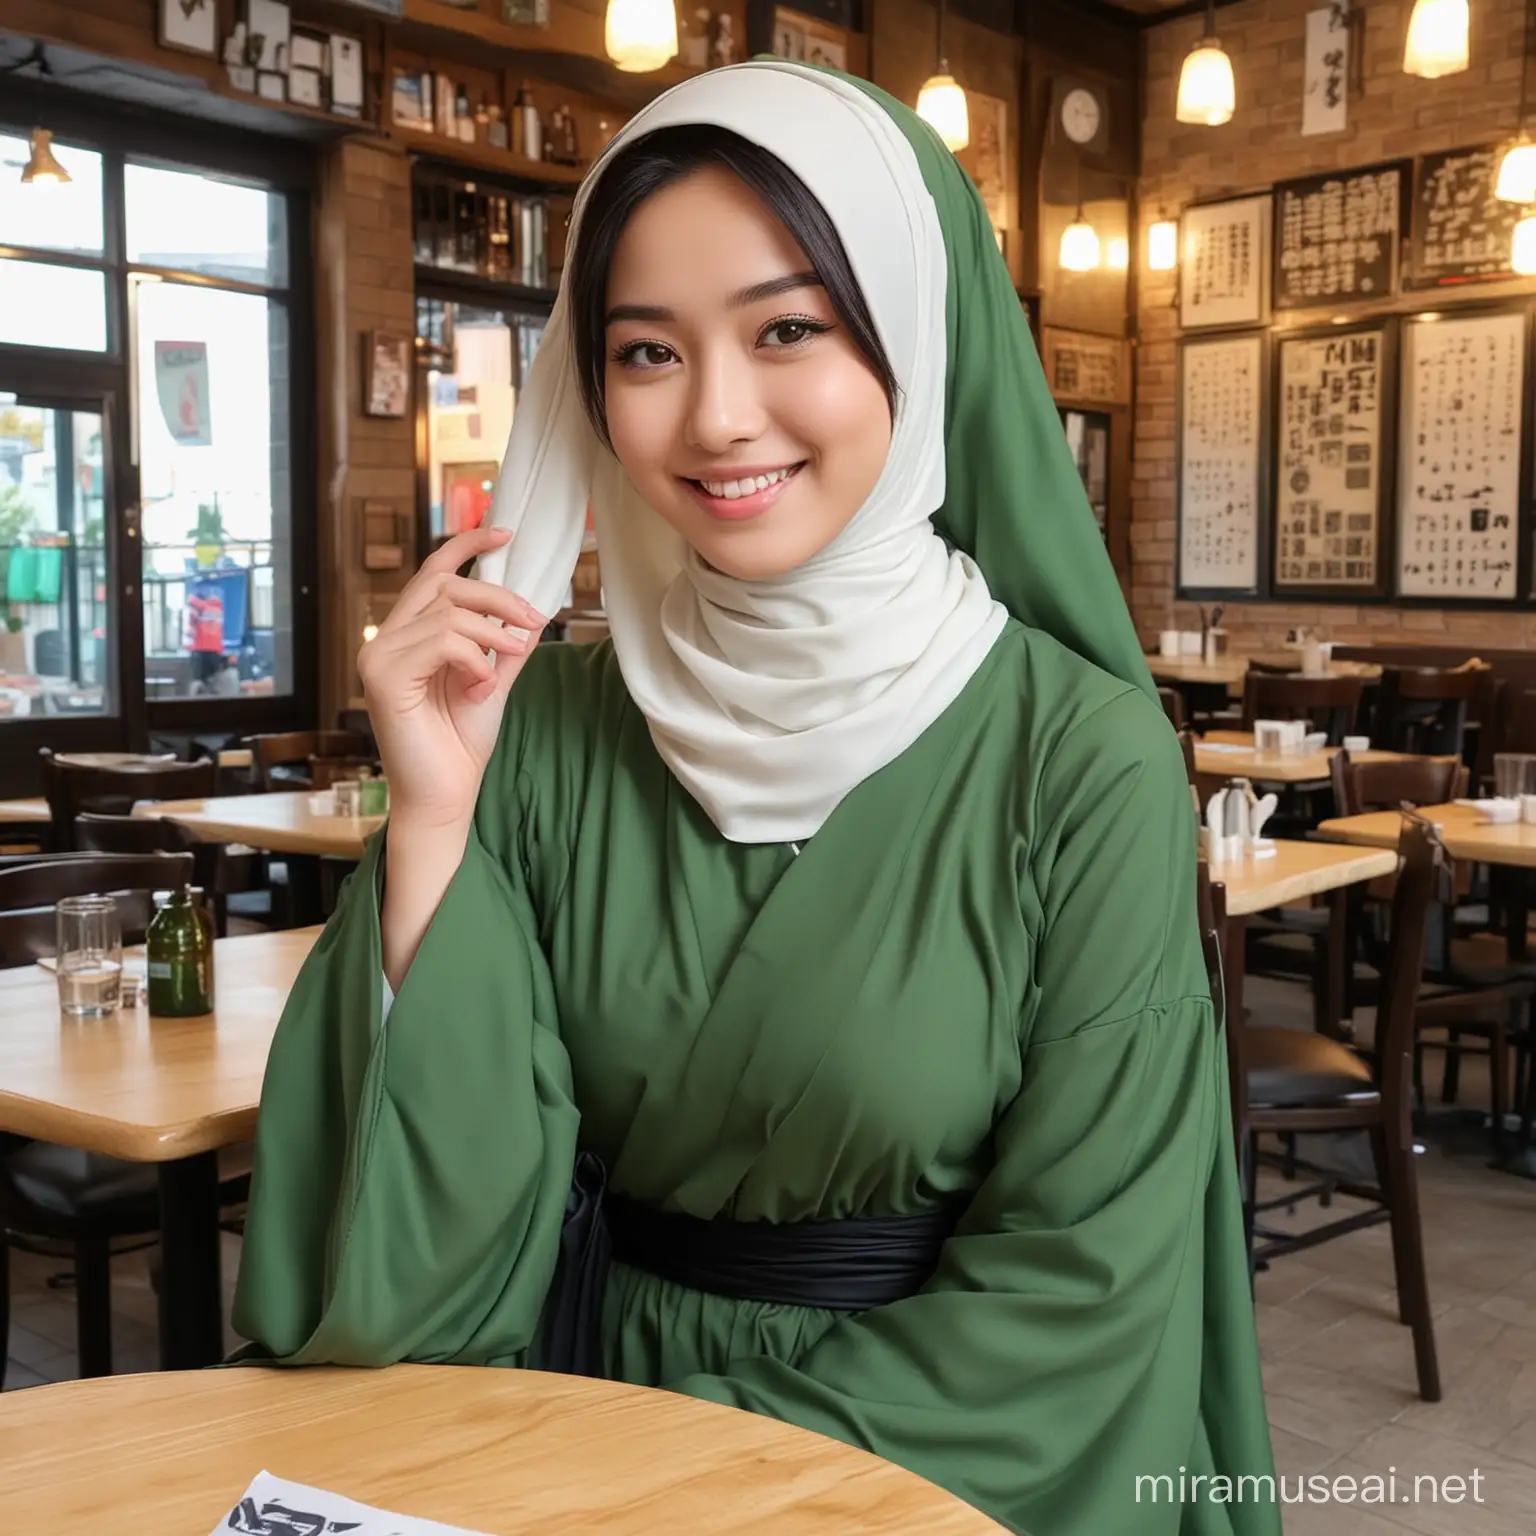 Japanese Teenage Girl in Hijab Enjoying a Busy Restaurant Atmosphere